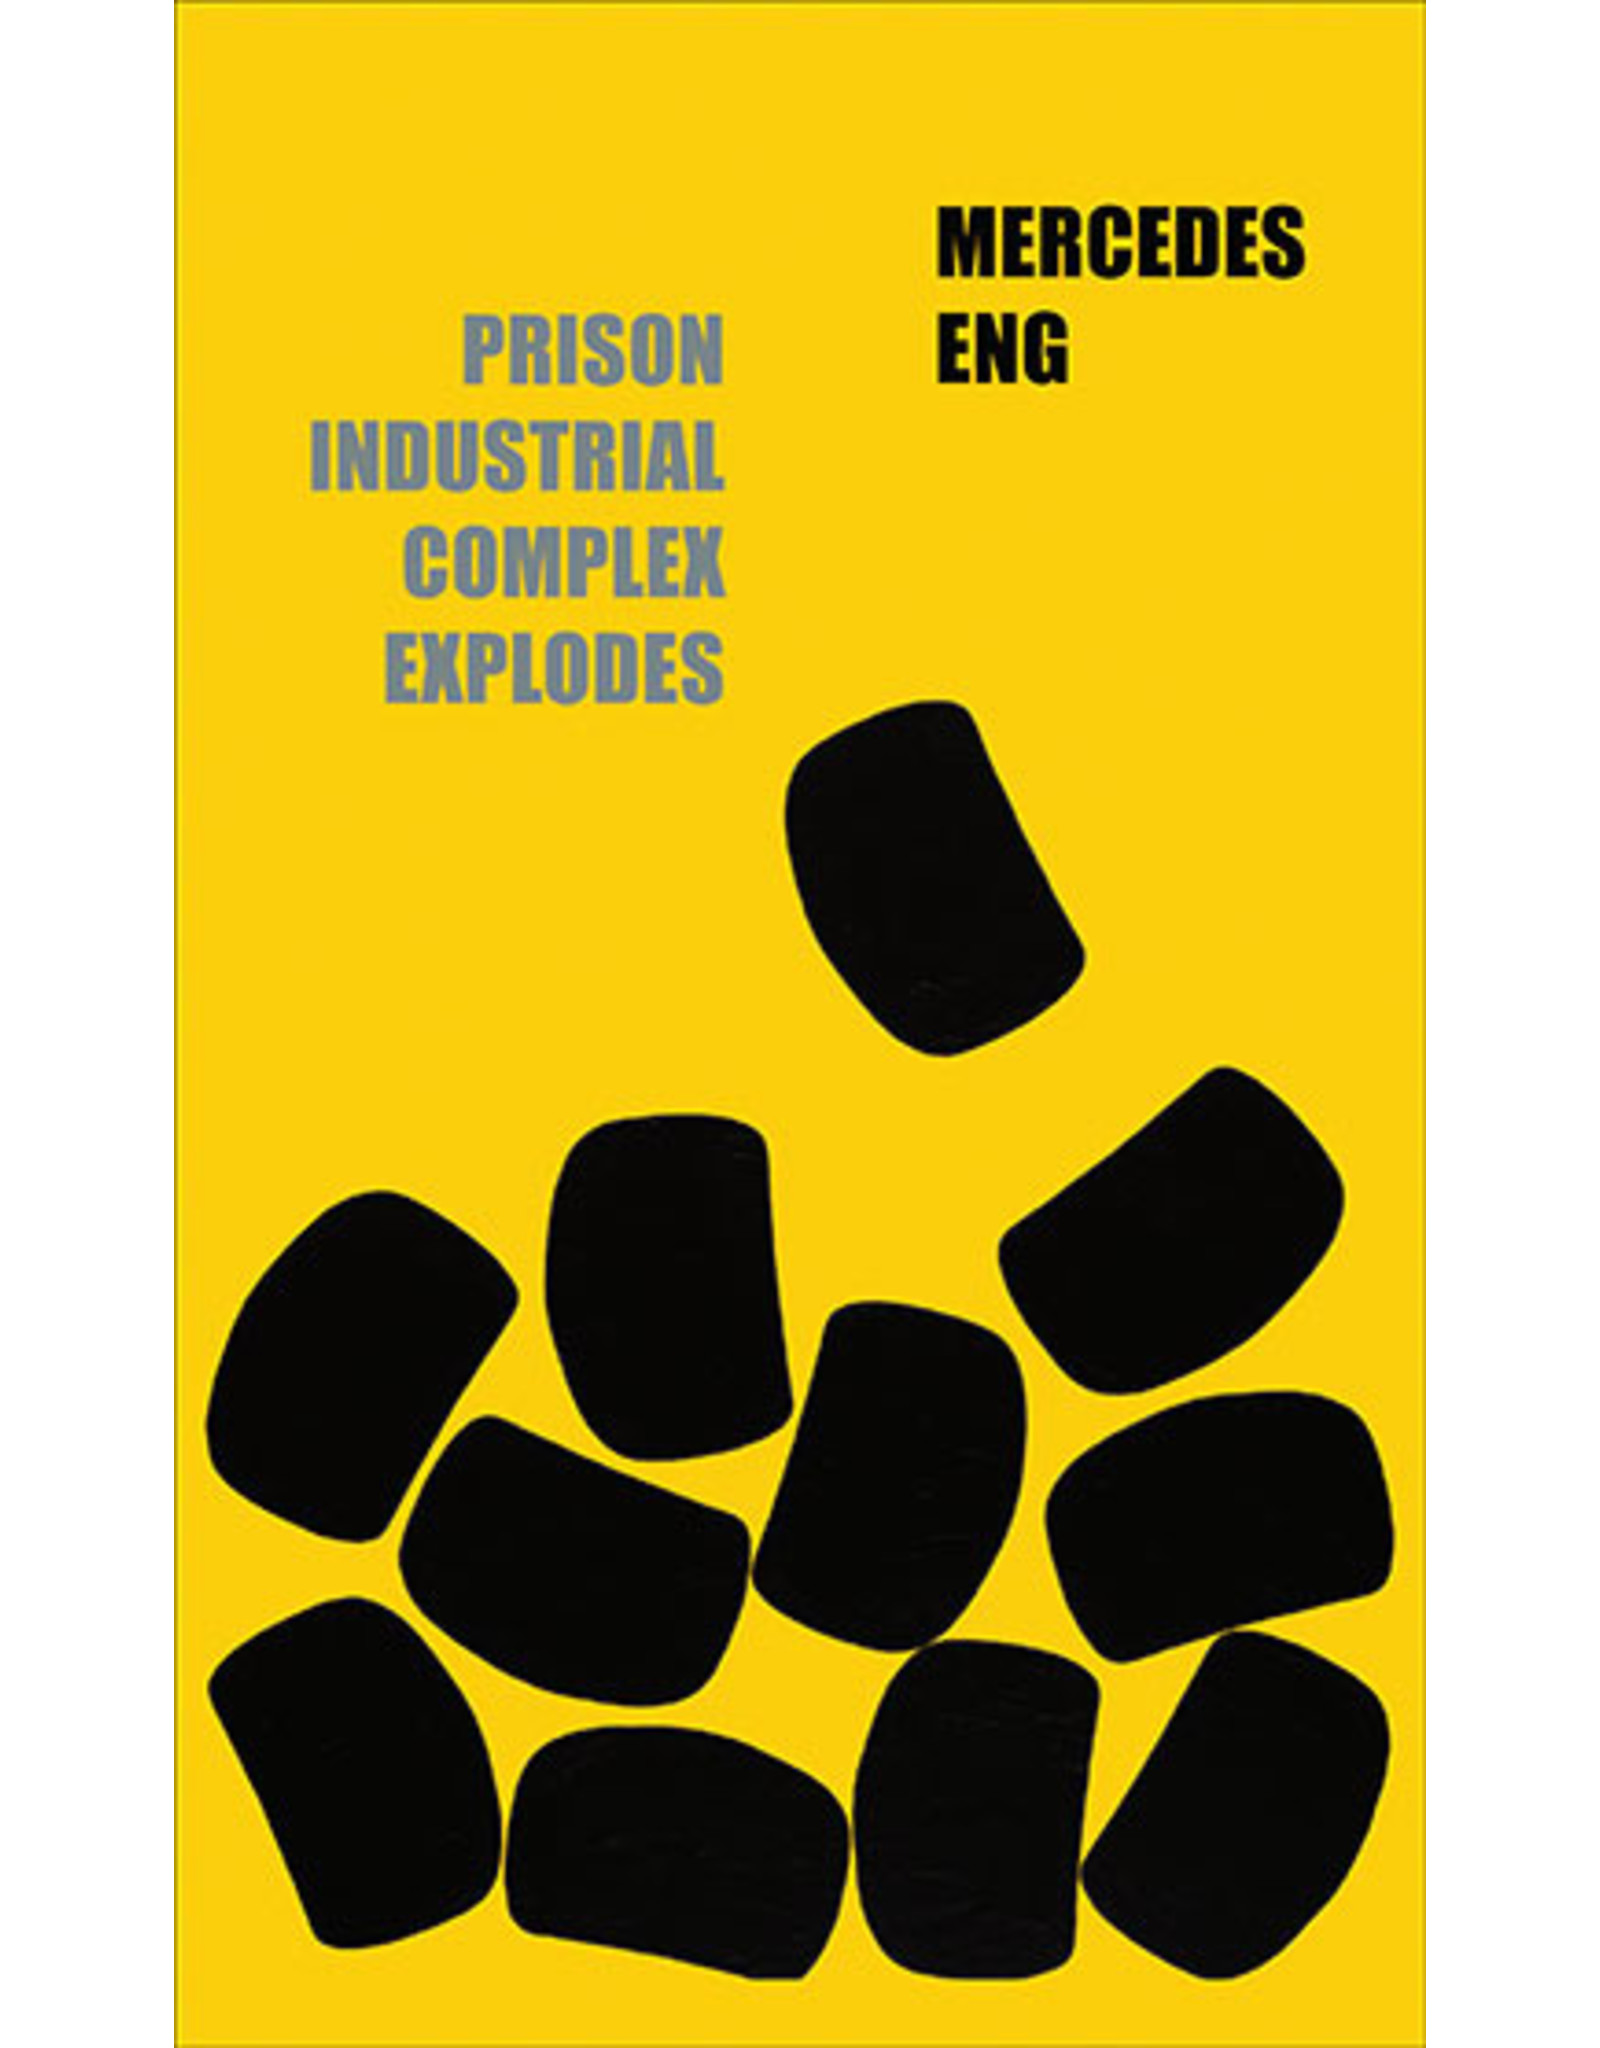 Textbook Prison Industrial Complex Explodes